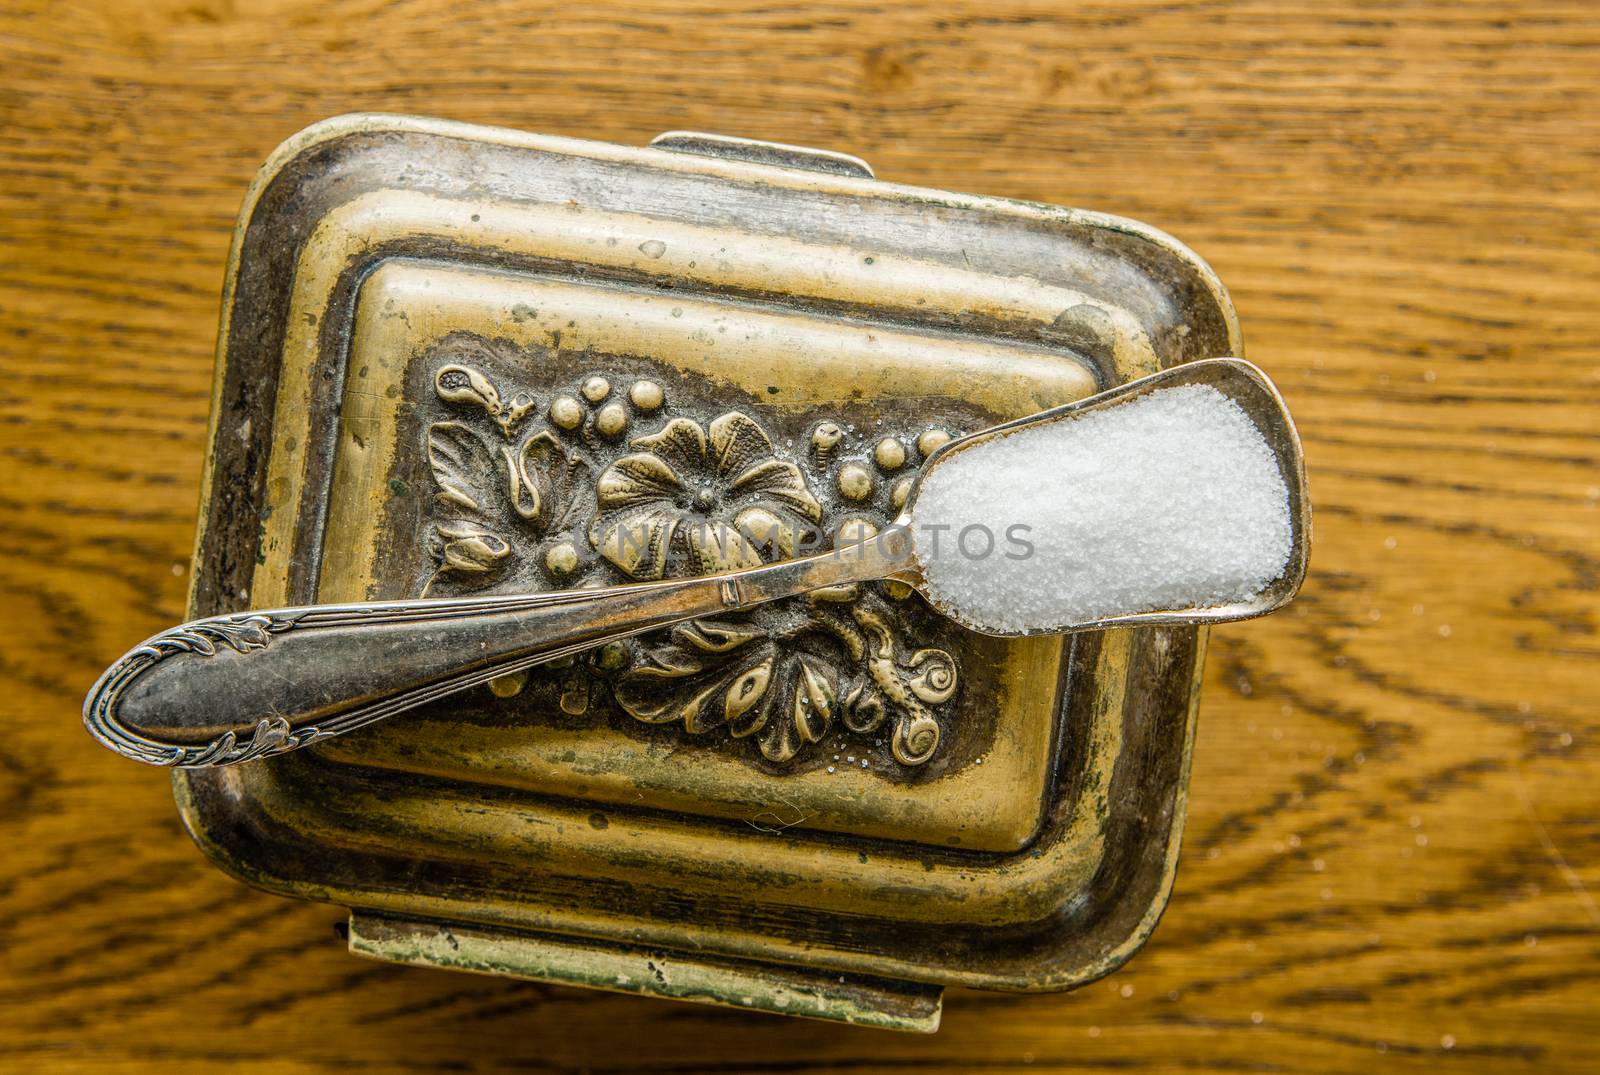 Spoon with sugar on a vintage sugar bowl by ben44